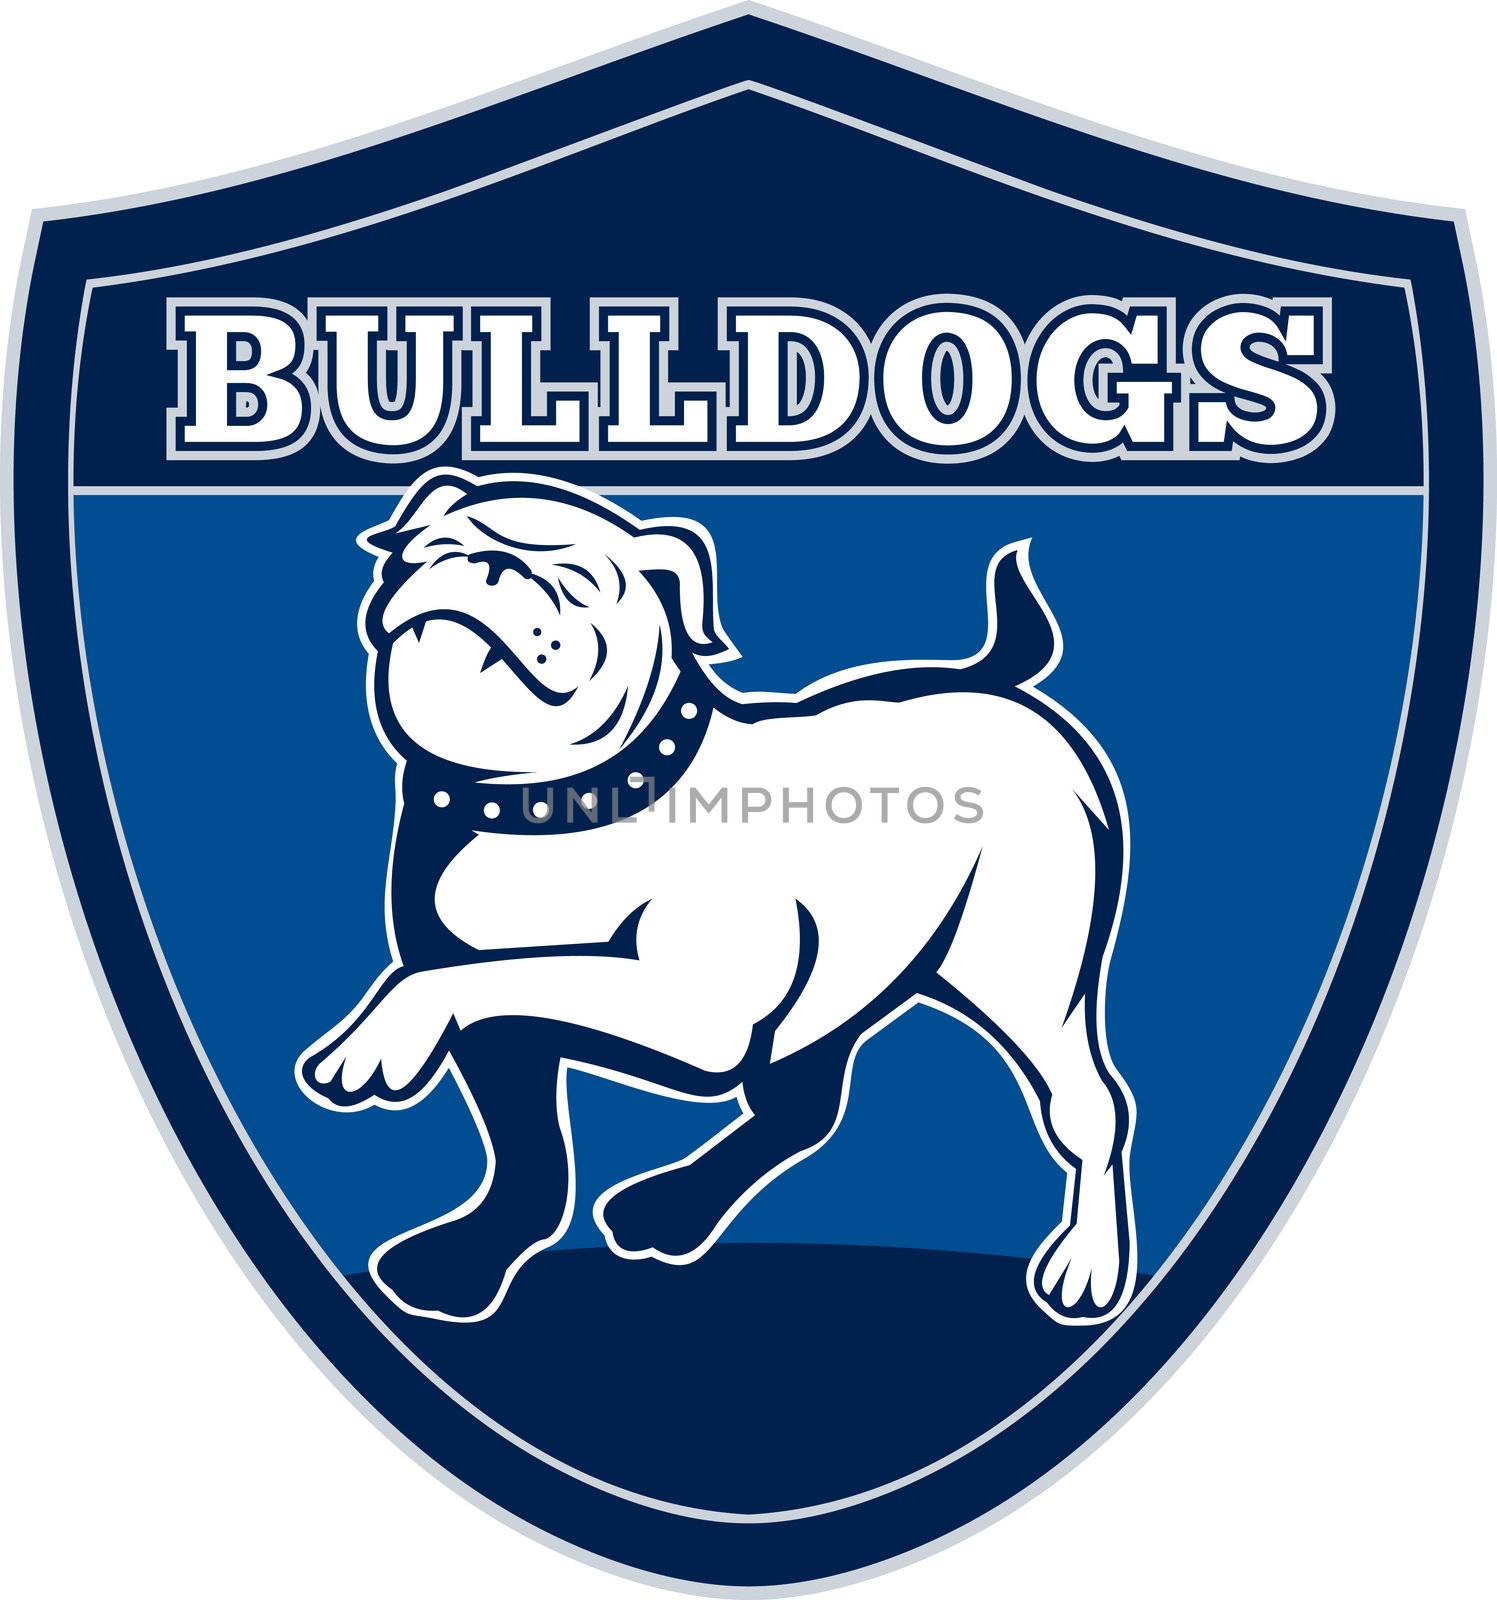 English bulldog british rugby sports team mascot by patrimonio